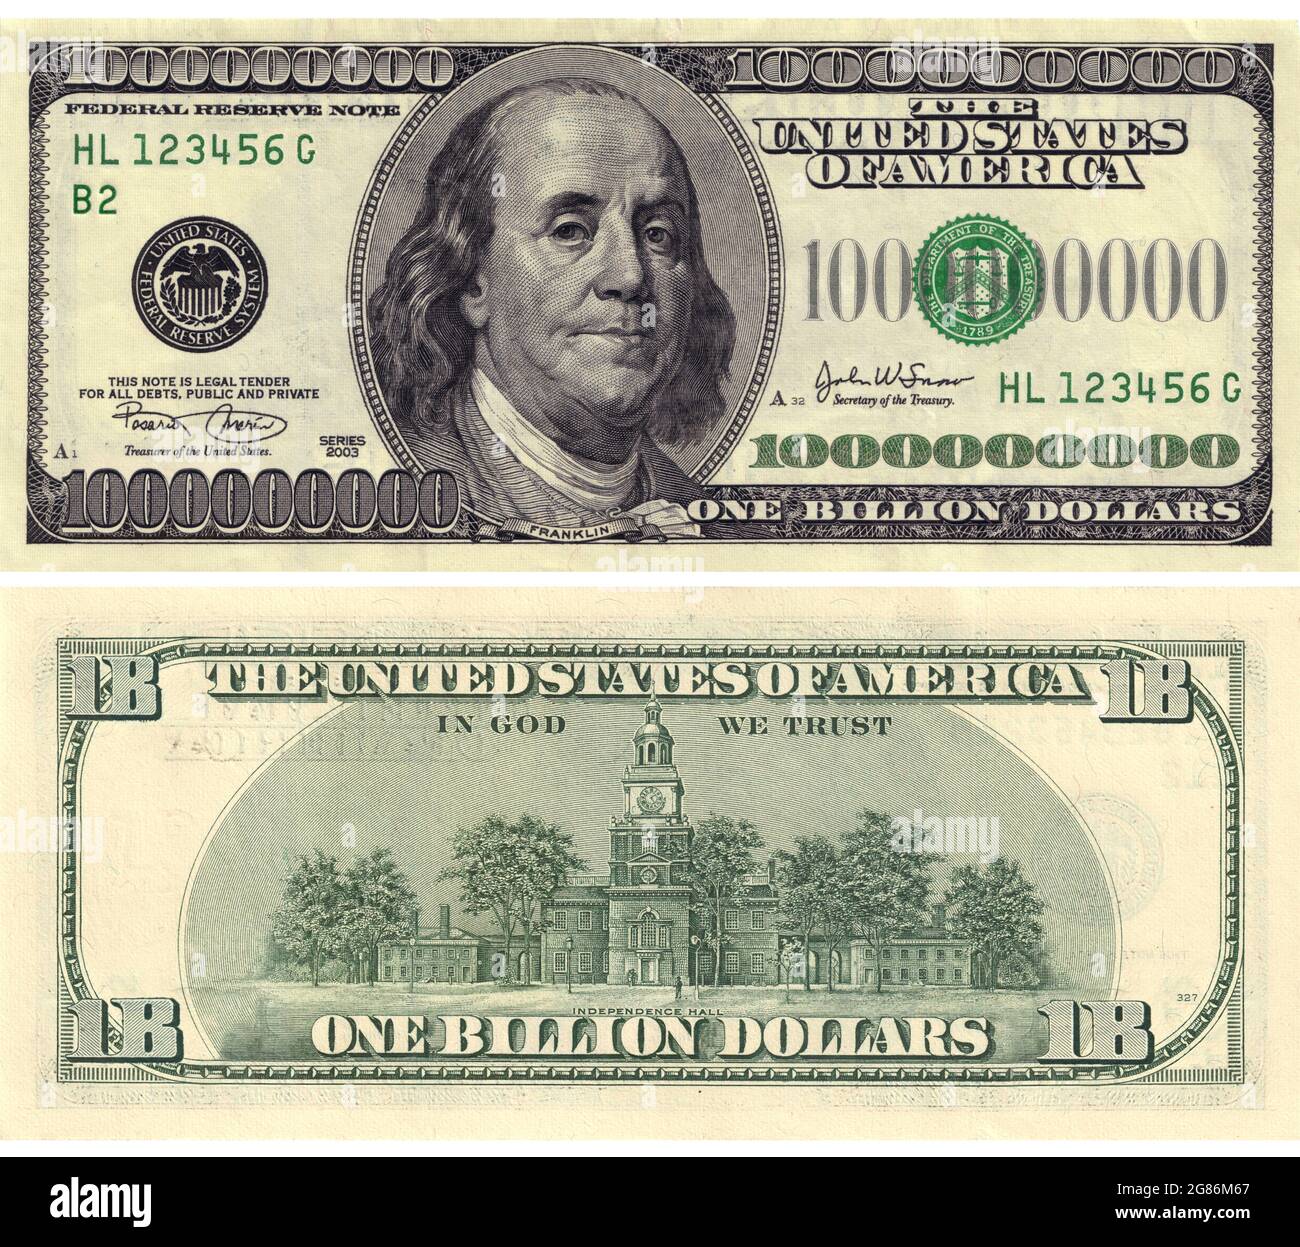 FREE SLEEVE Wisconsin State Million Dollar Bill Fake Funny Money Novelty Note 